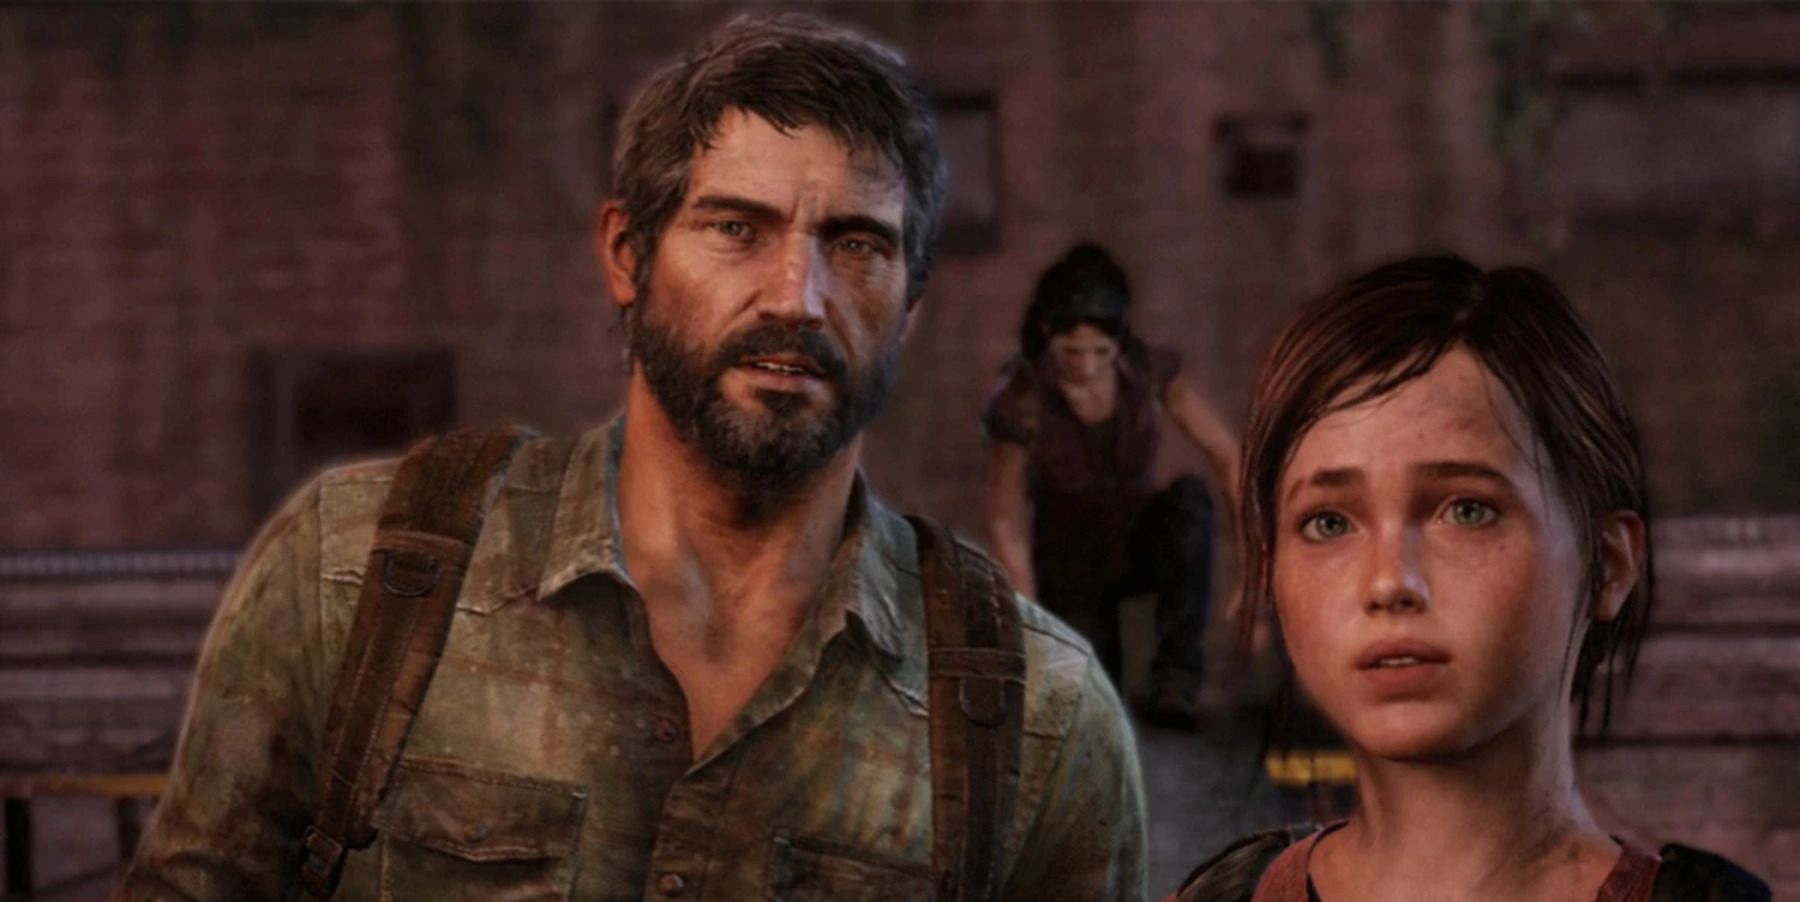 Gorgeous The Last of Us 2 Fan Art Highlights Joel's Impact on Ellie